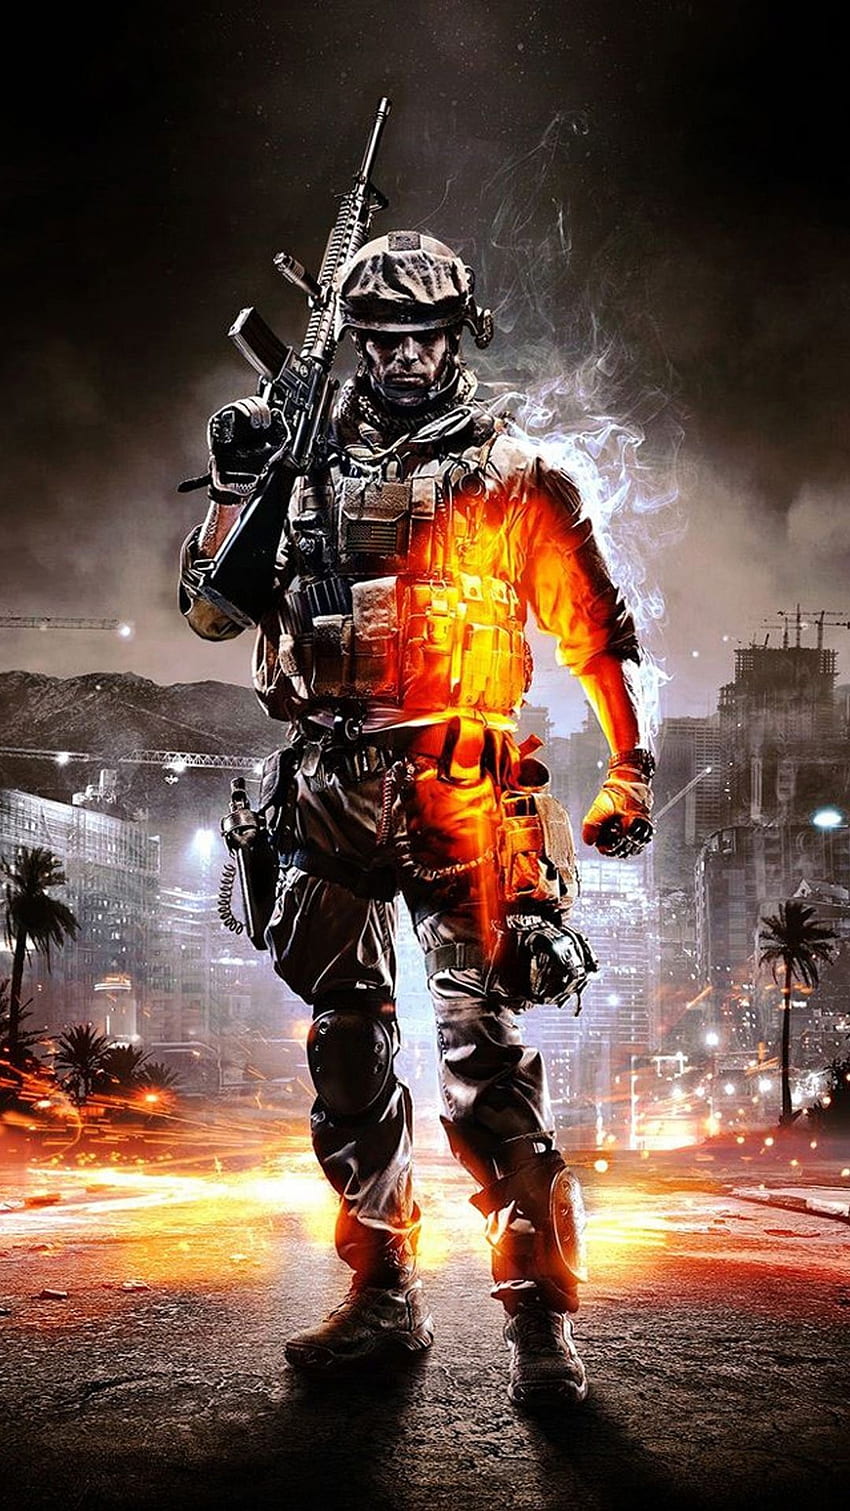 Battlefield 3 Premium Aftermath #battlefield #premium #aftermath #games  #1080P #wallpaper #hdwall… | Gaming wallpapers hd, Gaming wallpapers, Best  gaming wallpapers